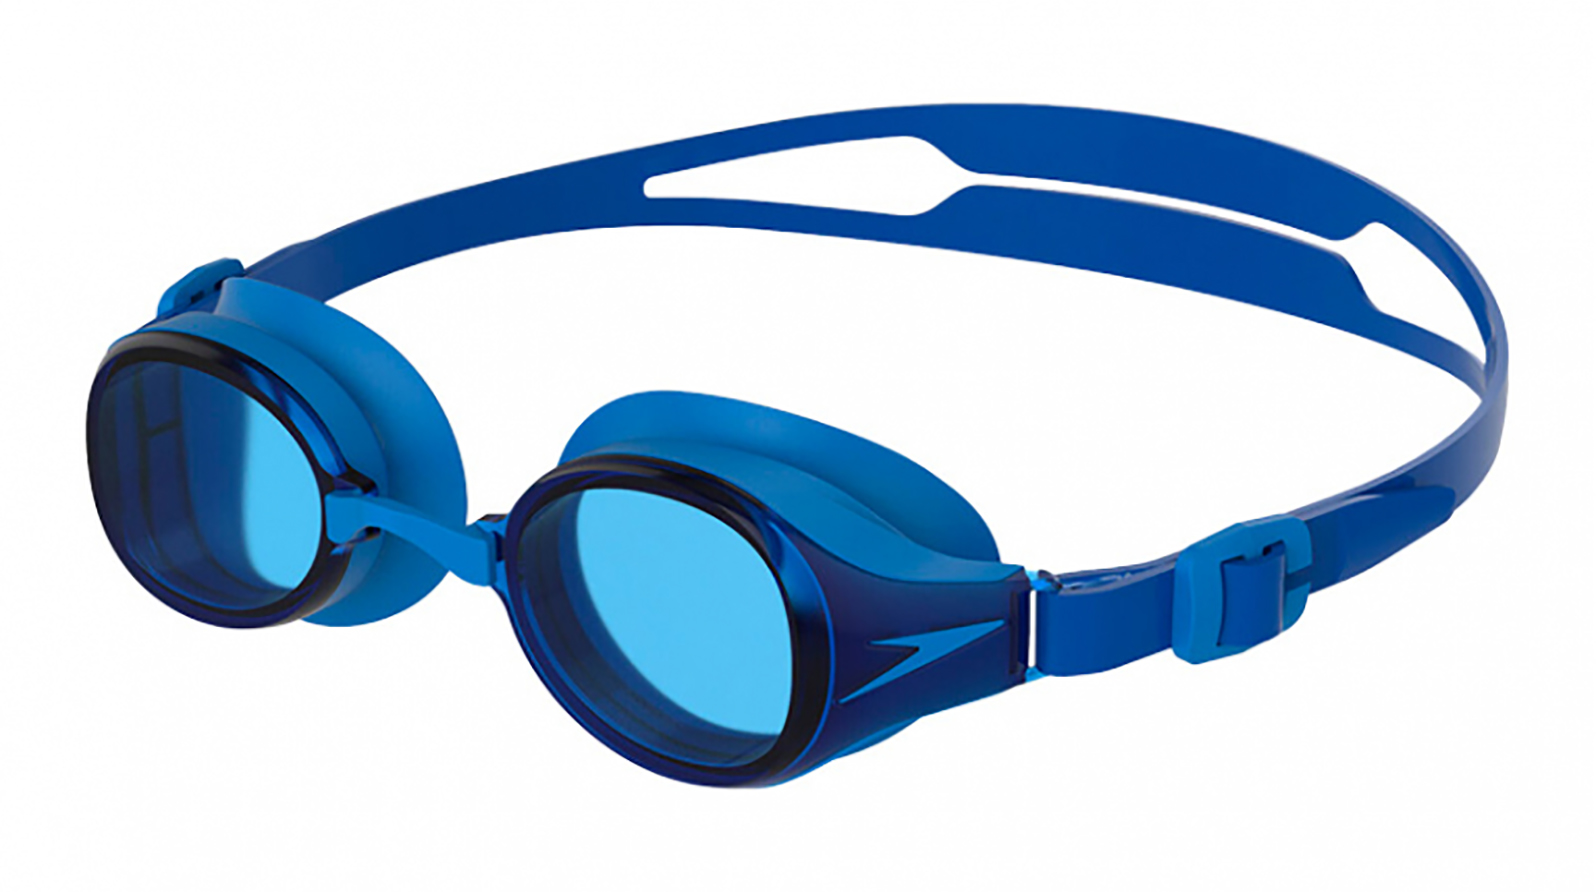 Speedo Очки для плавания Hydropure Optical F809 -4.0 speedo очки для плавания hydropure optical f809 3 5